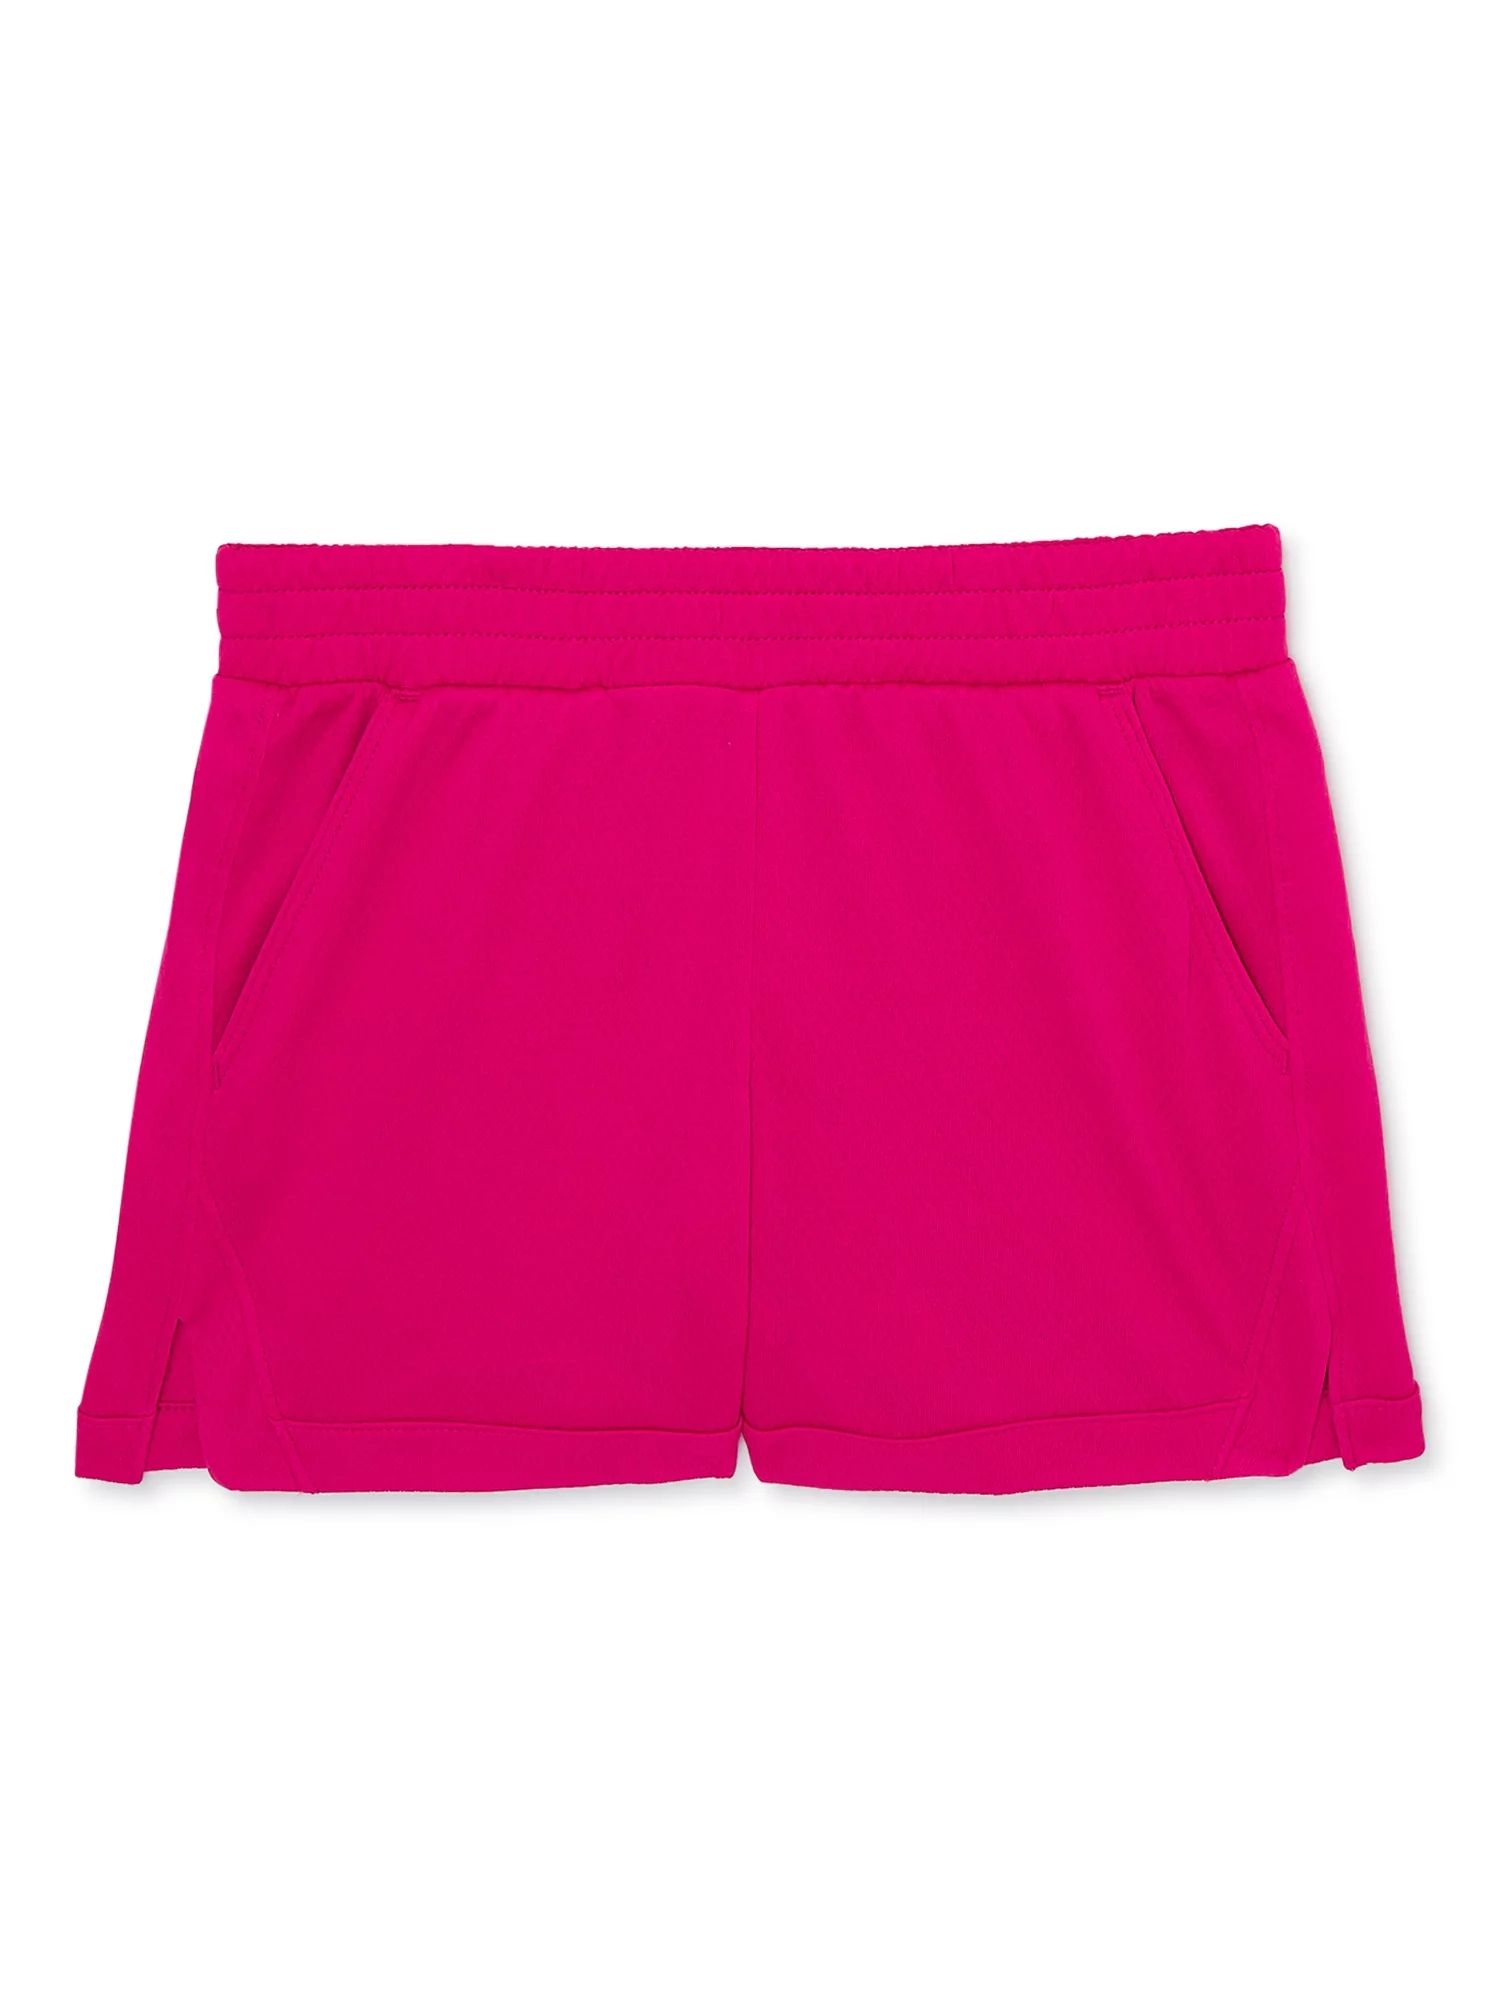 Athletic Works Girls Mesh Active Shorts, Sizes 4-18 Plus | Walmart (US)